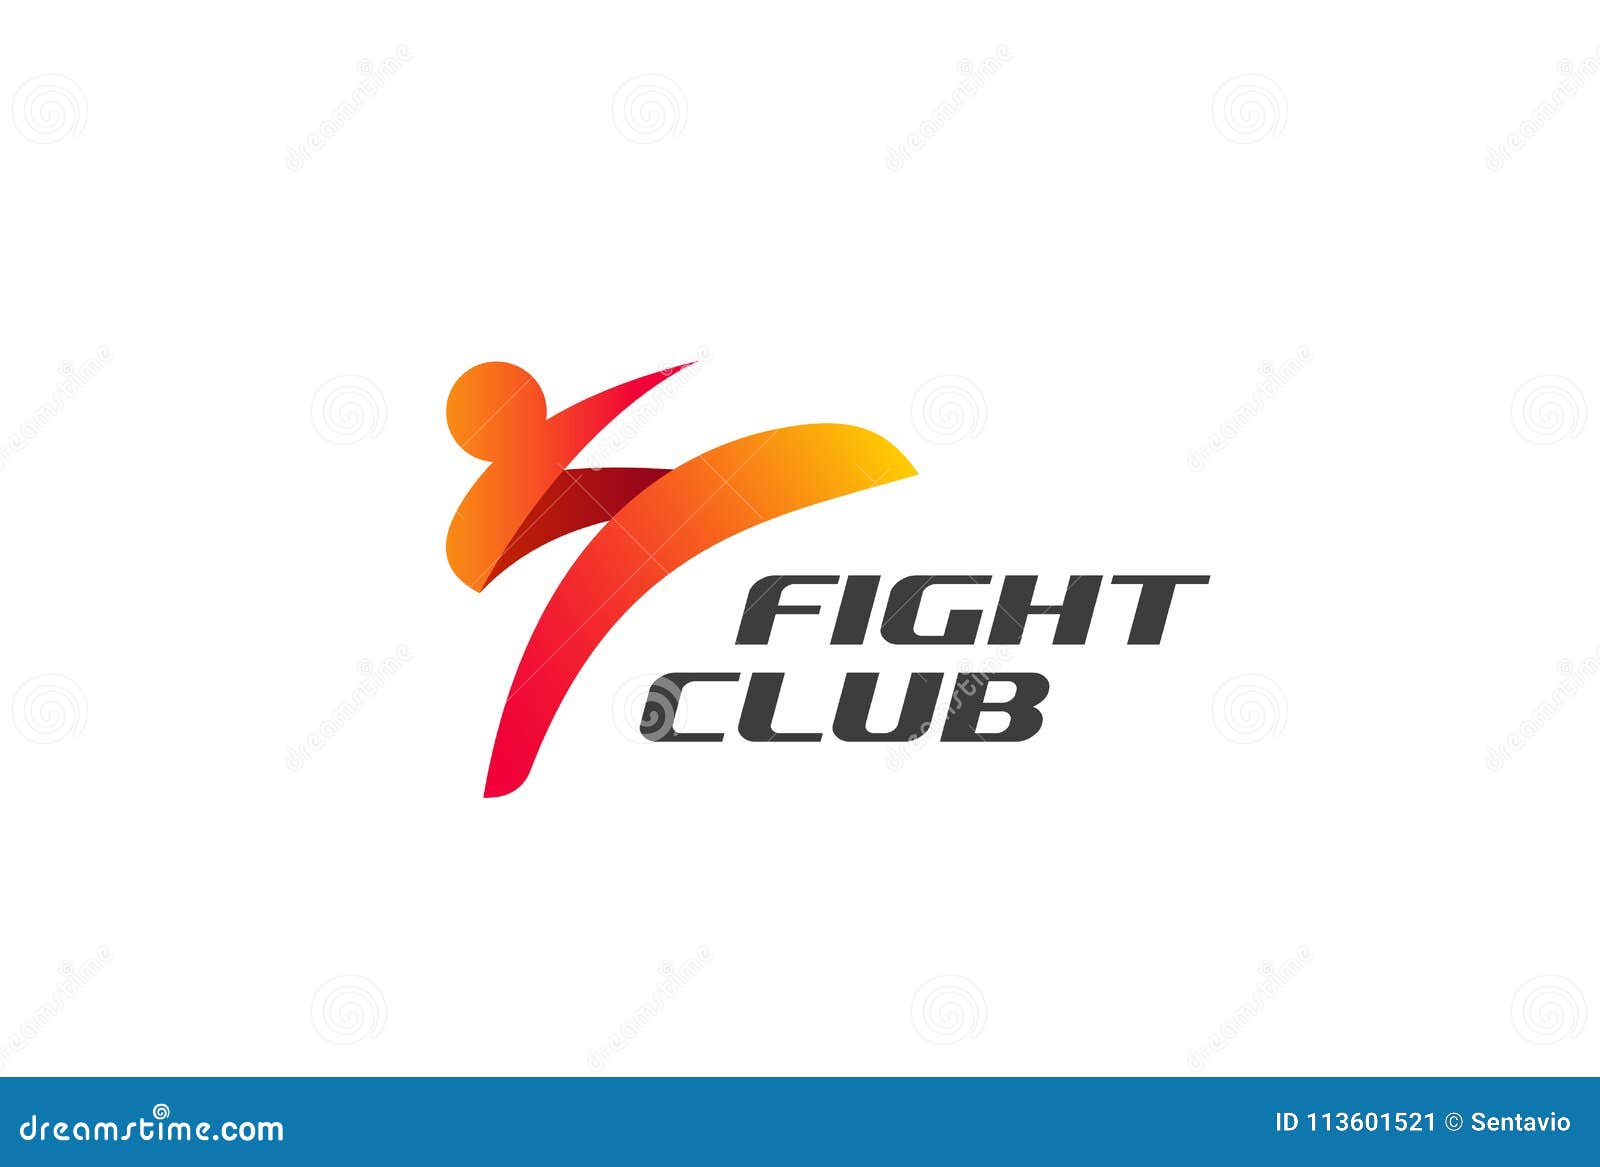 fight club karate kickboxing taekwondo logo 